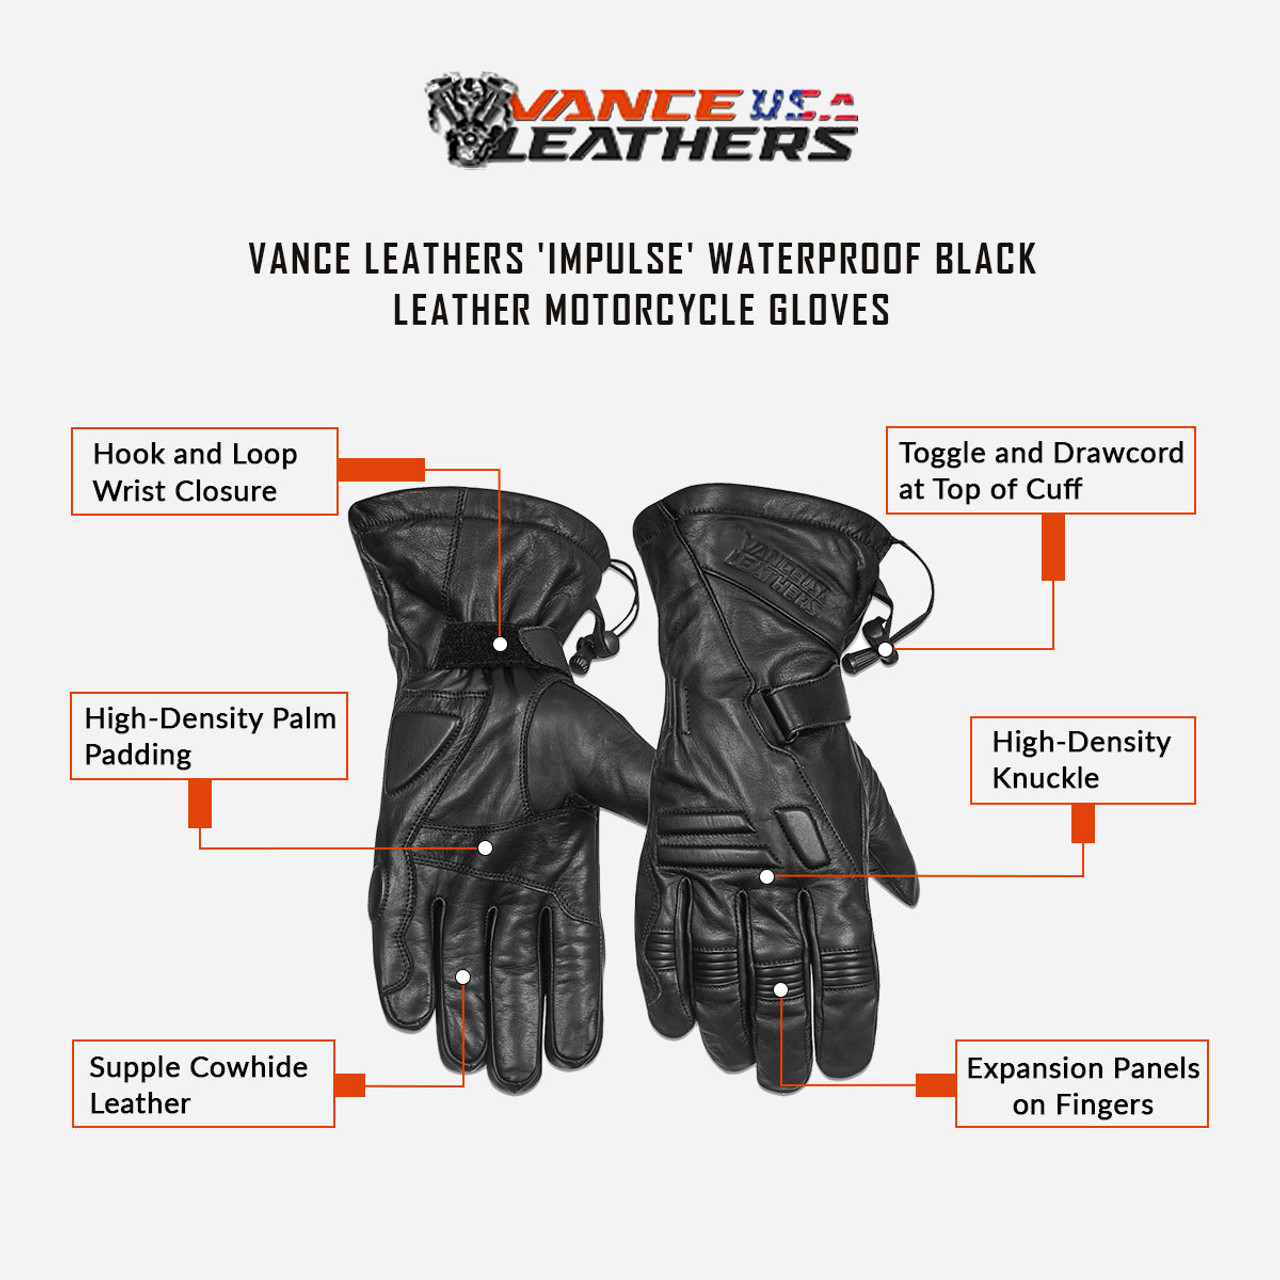 Vance Leathers 'Impulse' Waterproof Black Leather Motorcycle Gloves - info